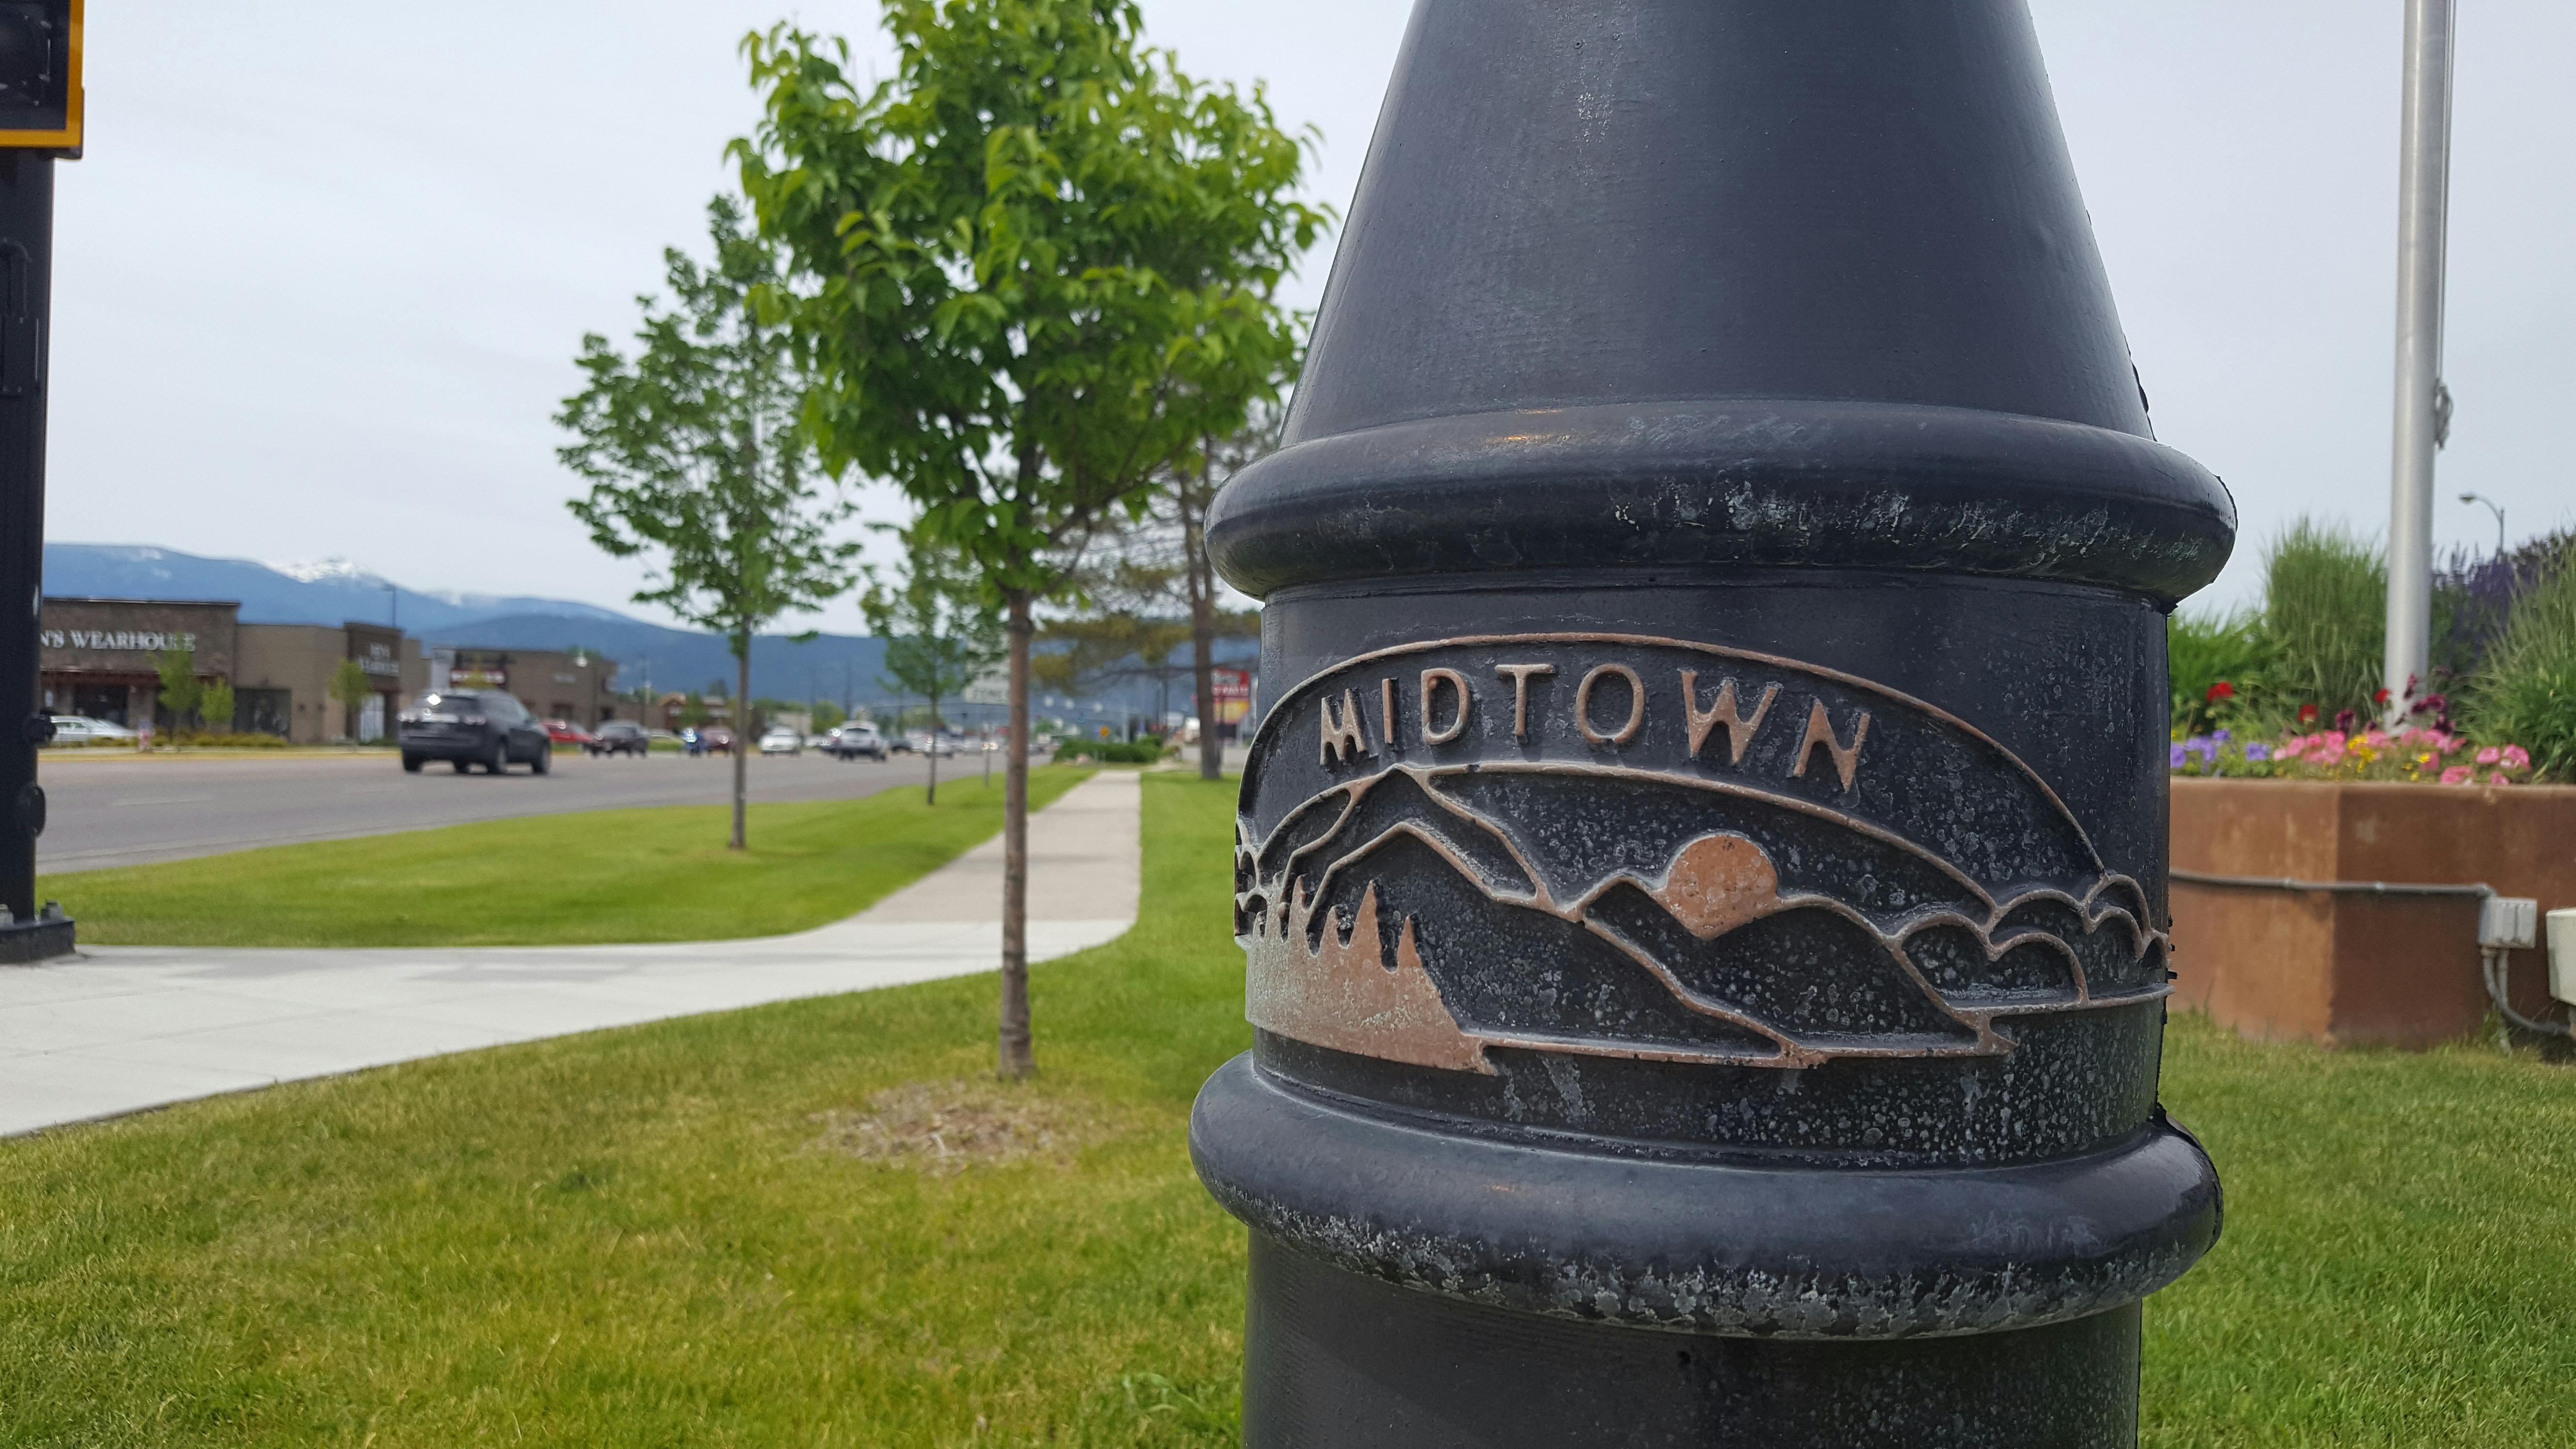 Midtown Light Post